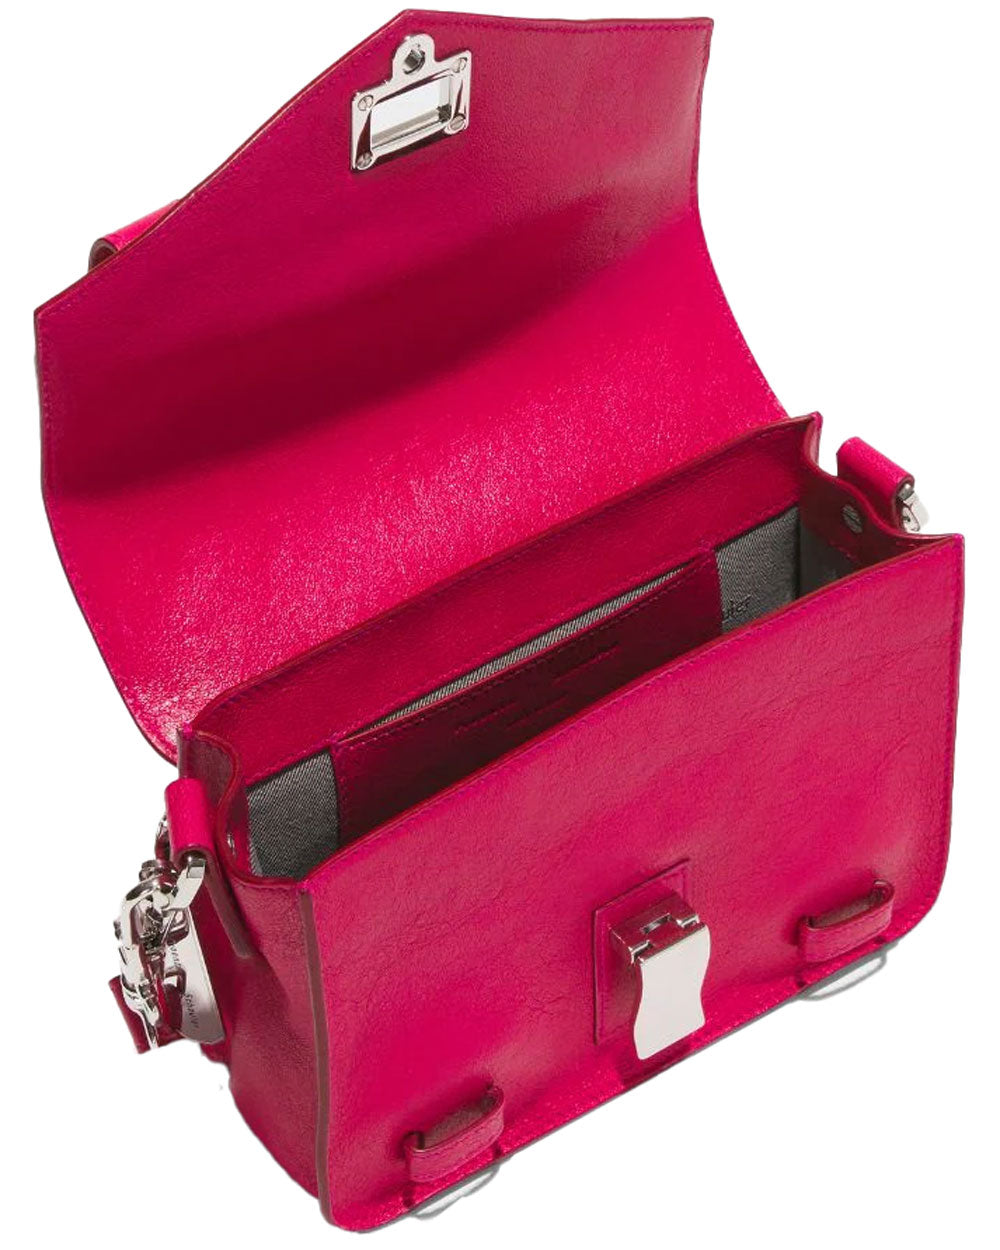 PS1 Mini Crossbody Bag in Fuchsia